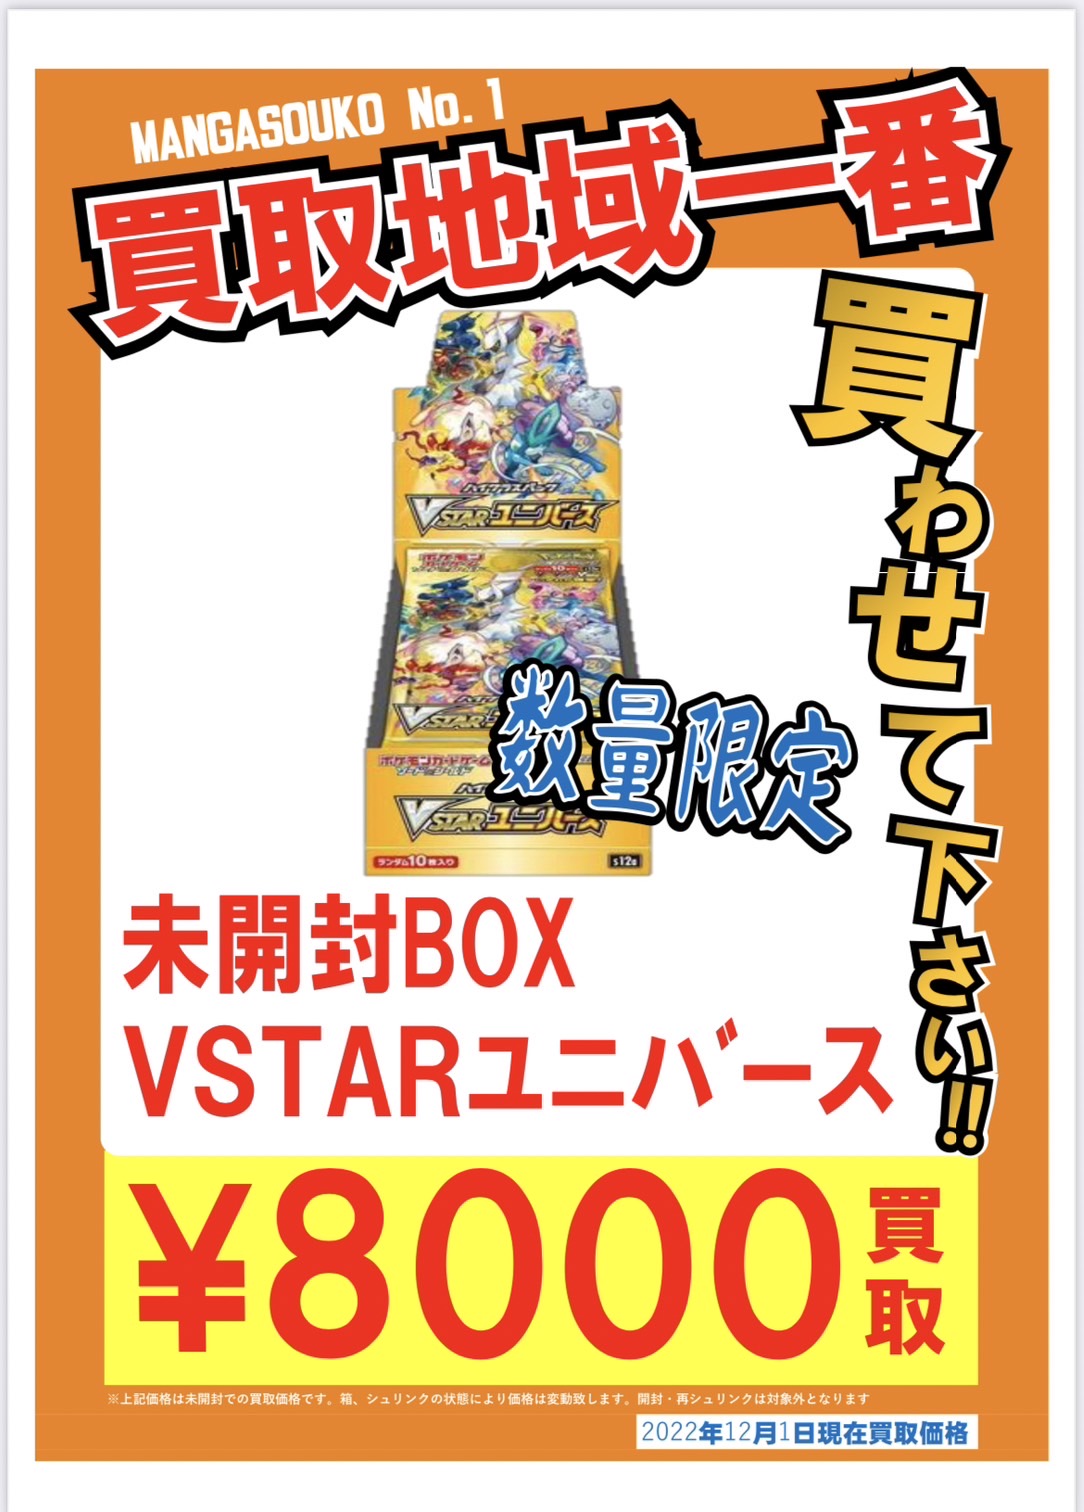 VSTARユニバース BOX シュリンク付き-connectedremag.com